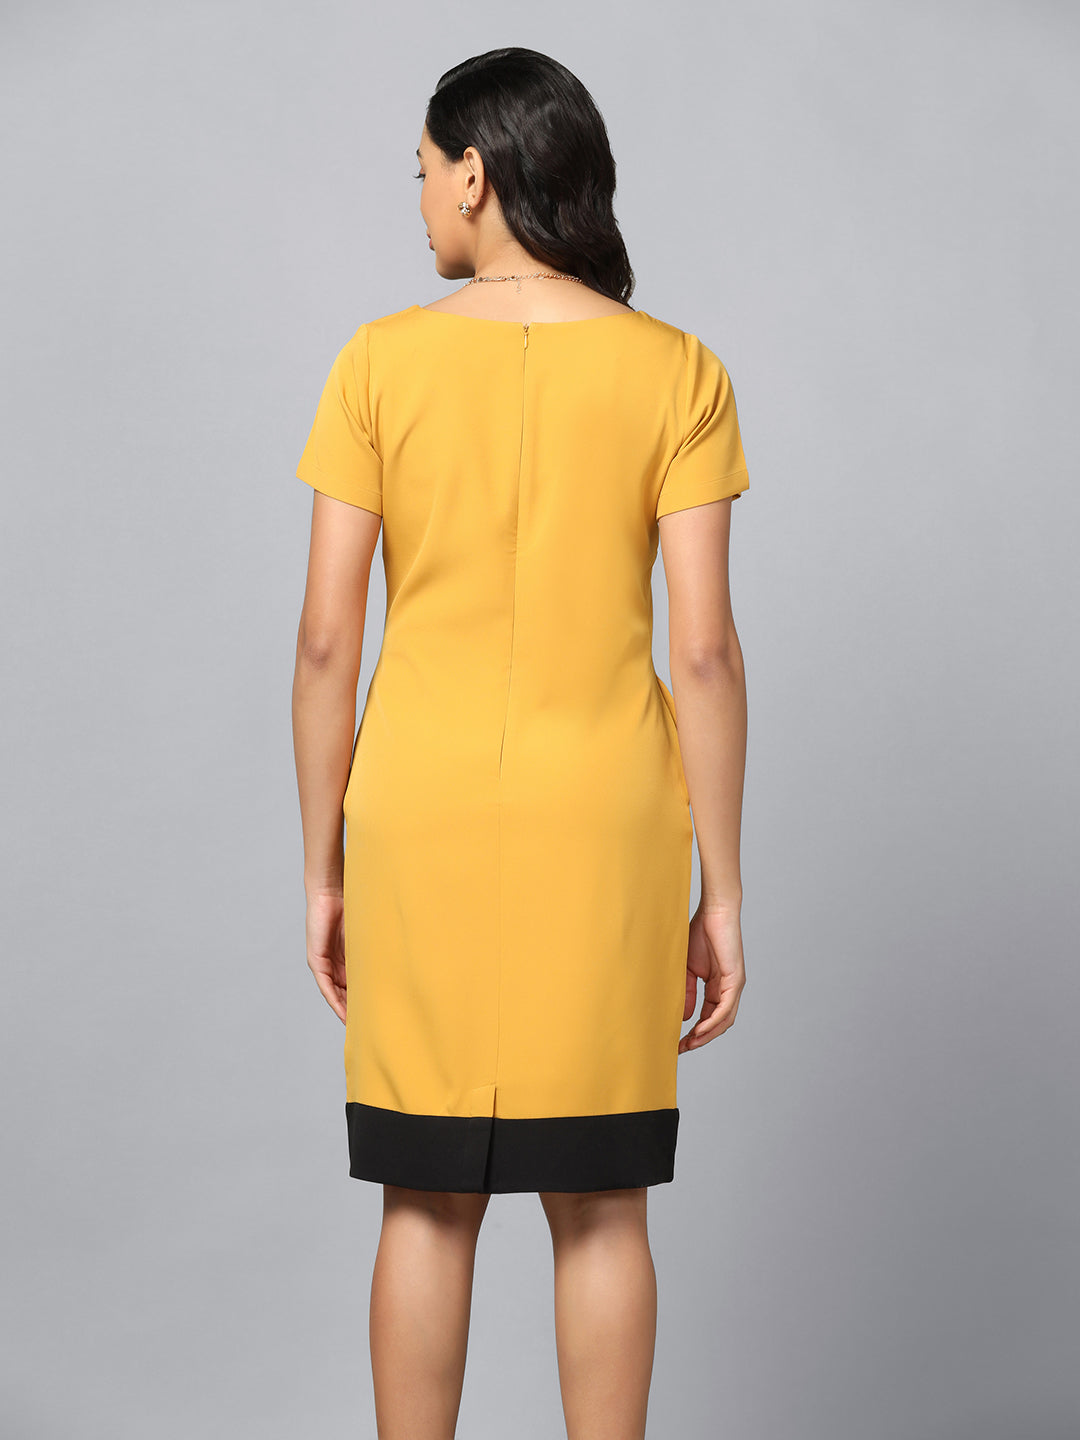 Mustard Polyester Stretch Sheath Dress